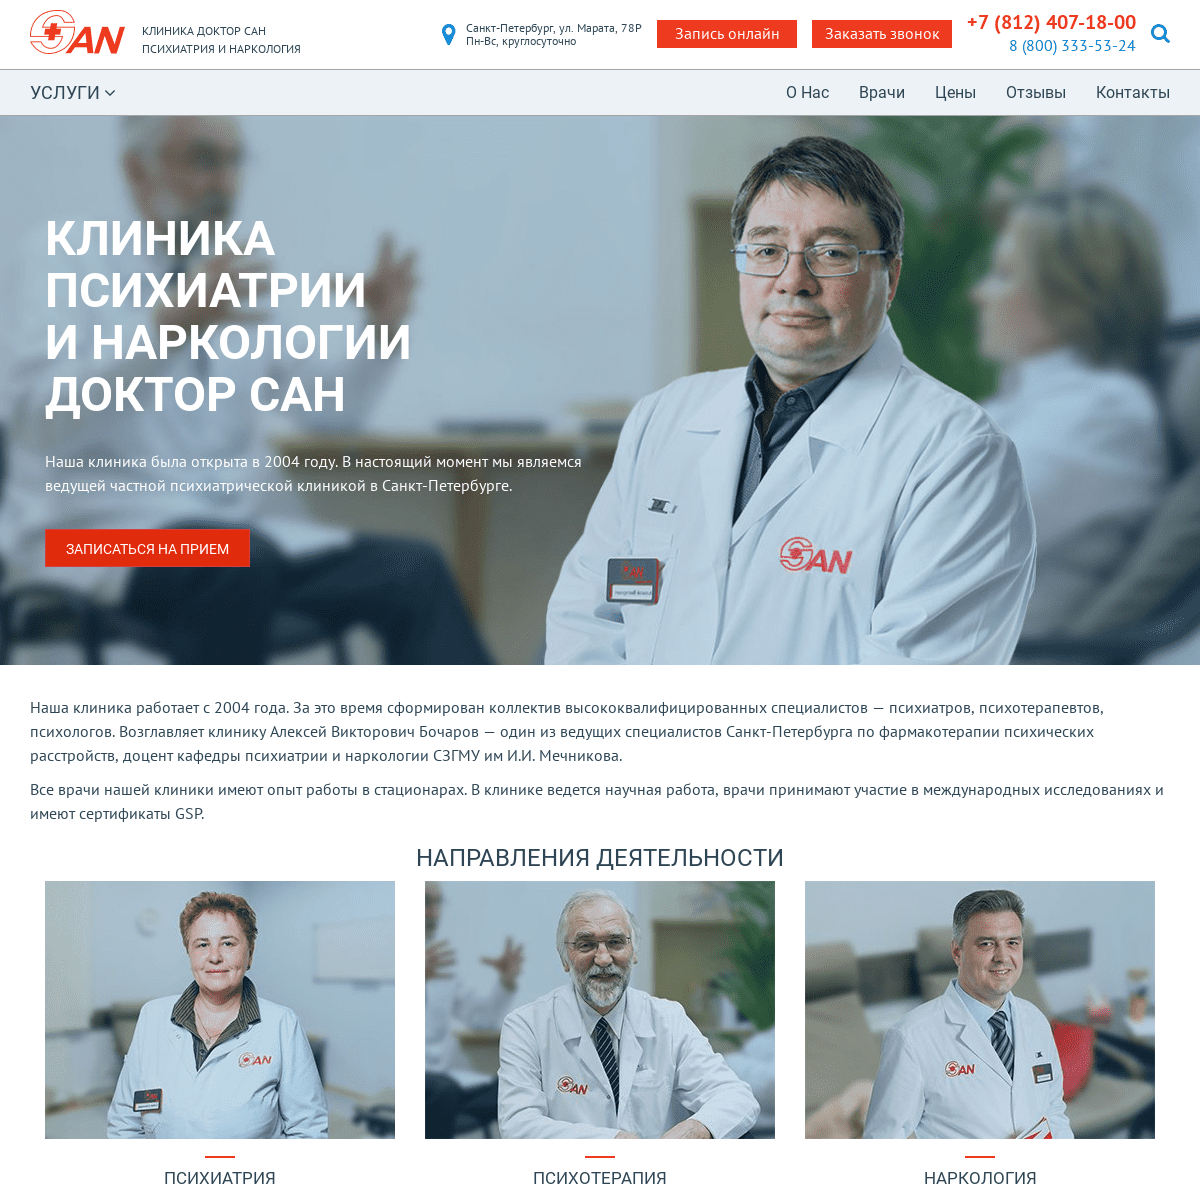 A complete backup of doctorsan.ru